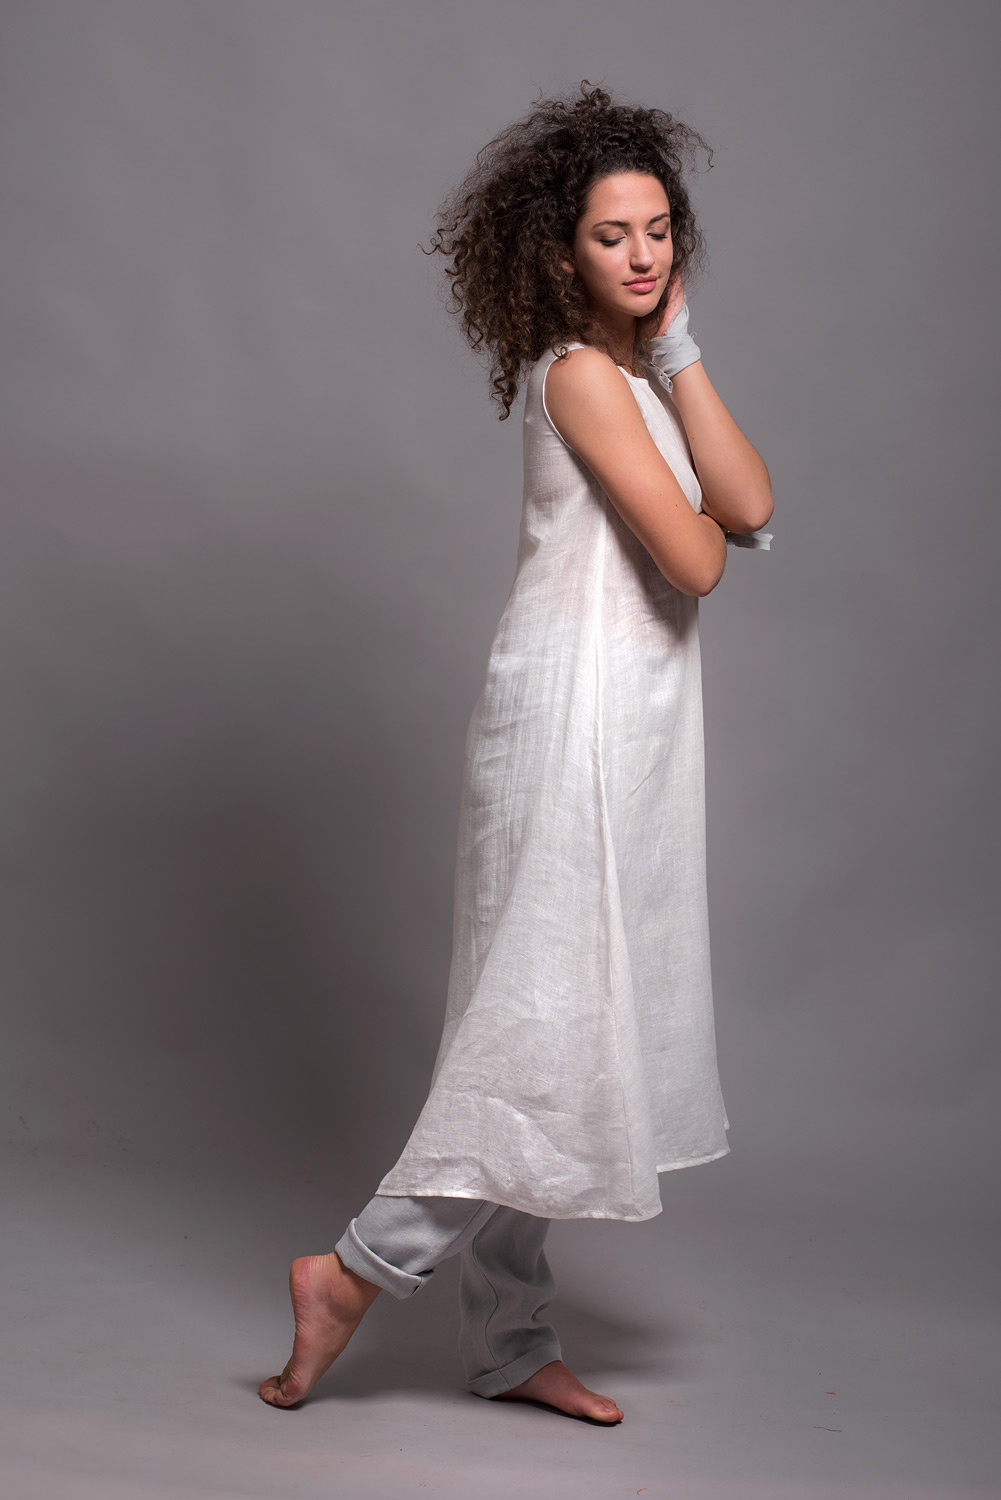 Linen Underdress, Ladies White Linen Dresses